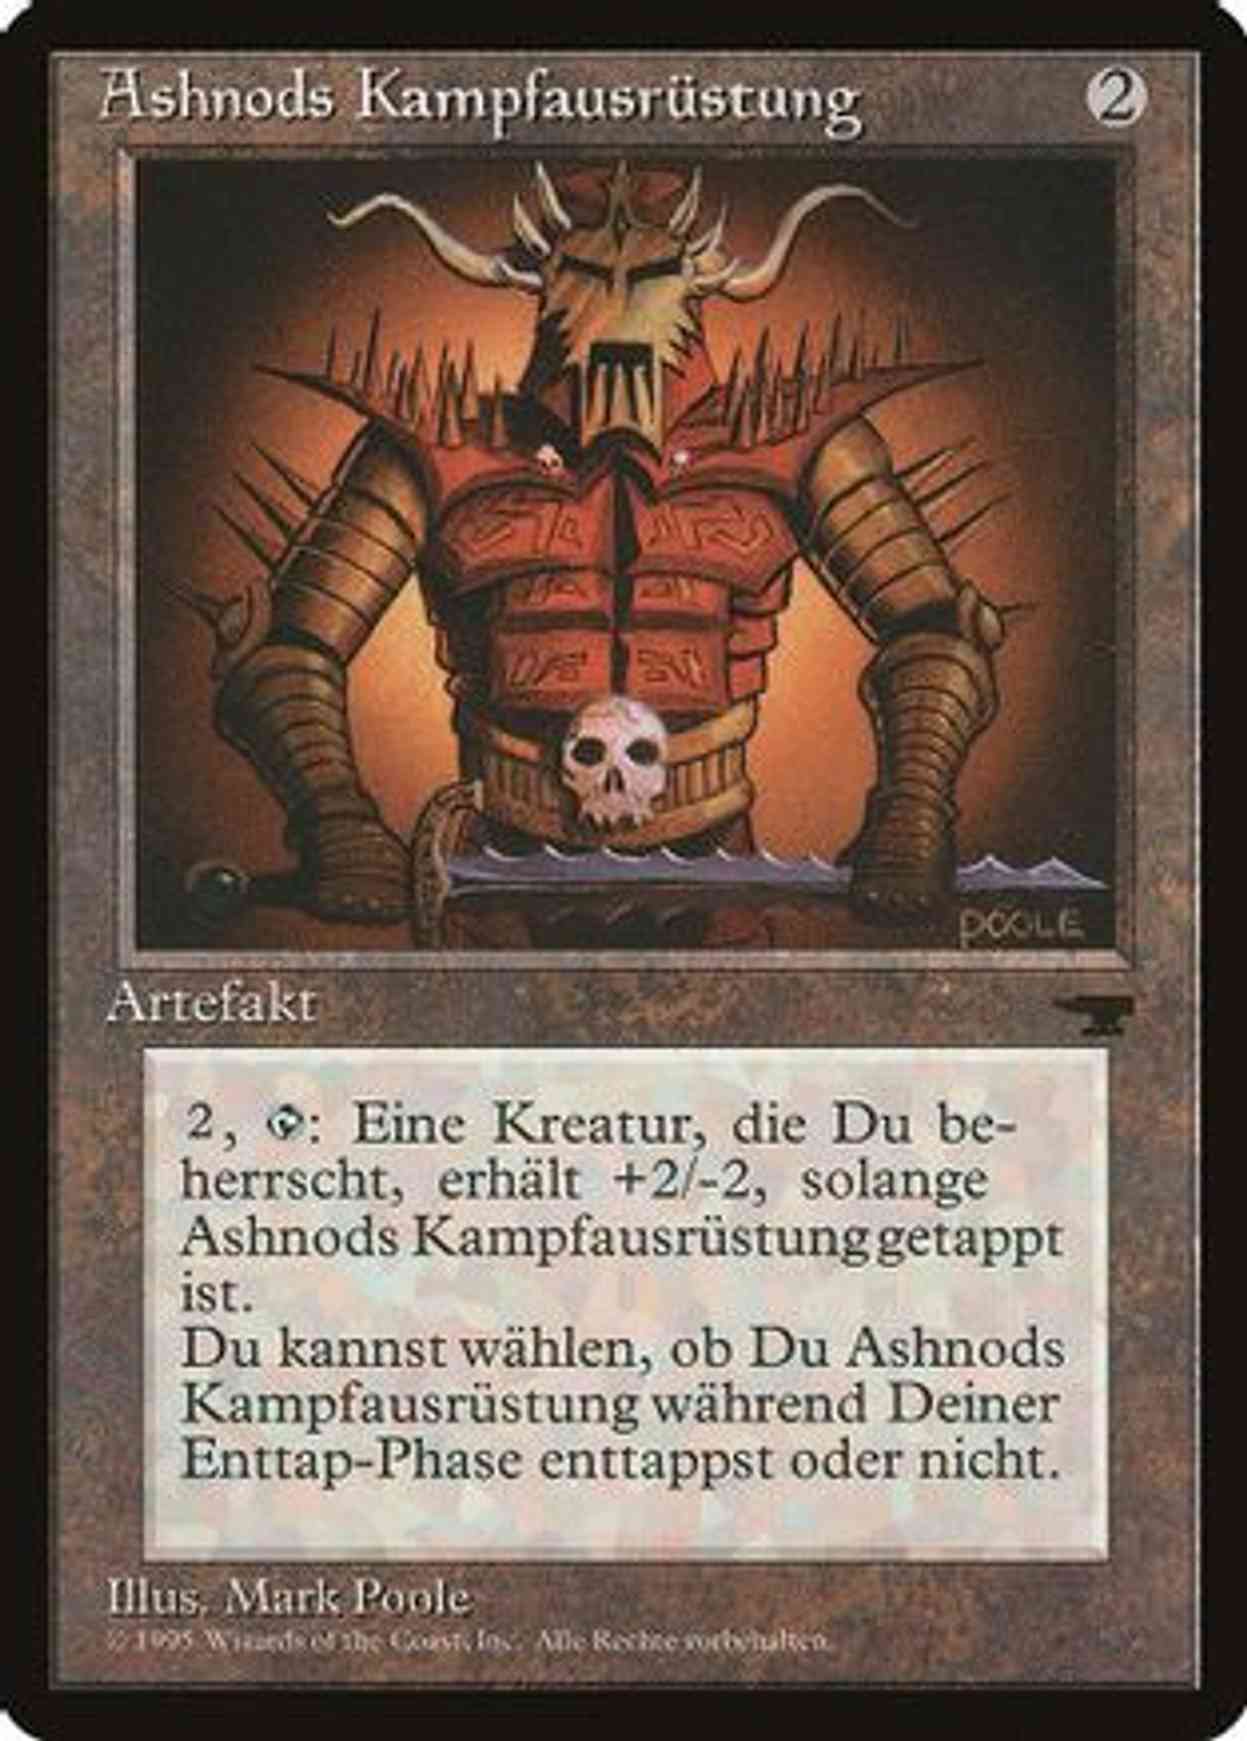 Ashnod's Battle Gear (German) - "Ashnods Kampfausrustung" magic card front